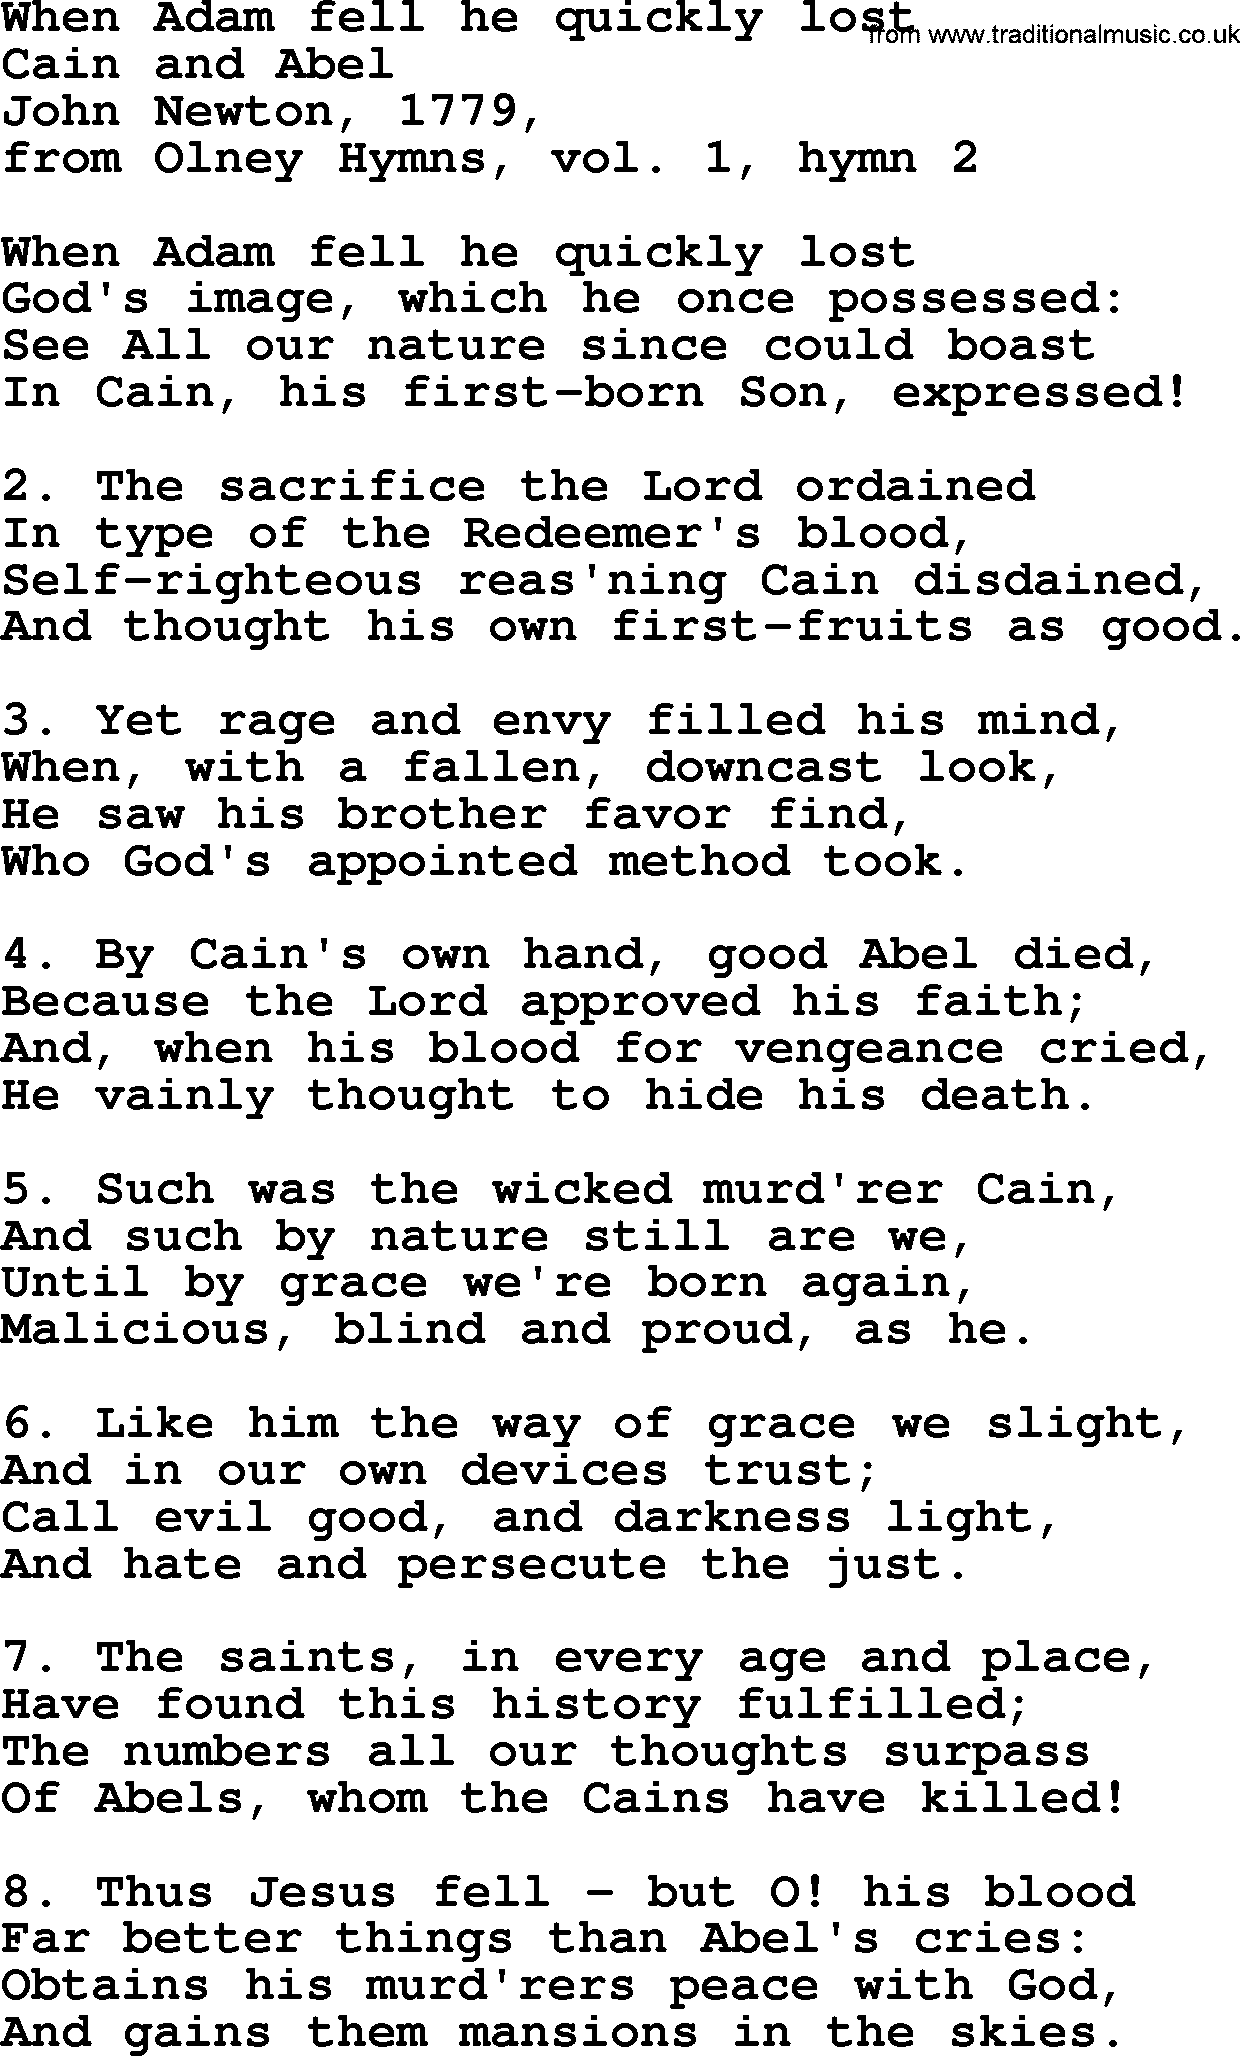 John Newton hymn: When Adam Fell He Quickly Lost, lyrics